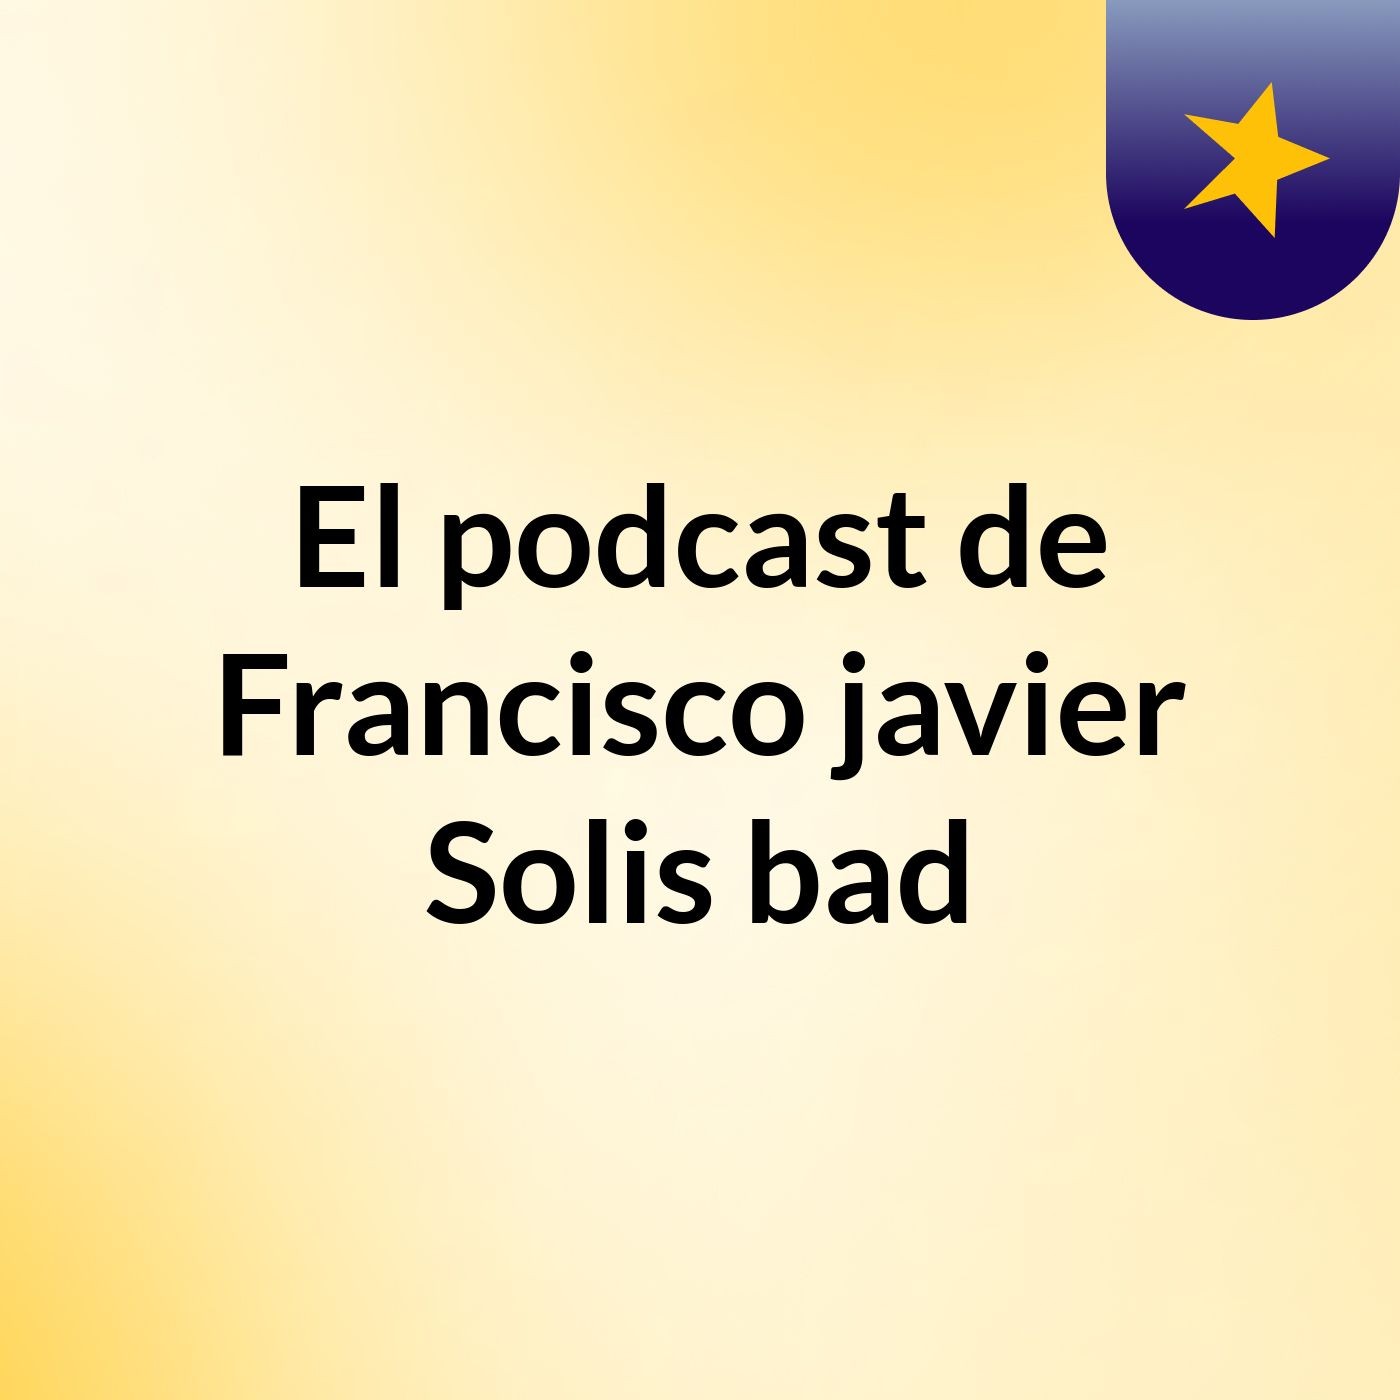 El podcast de Francisco javier Solis bad